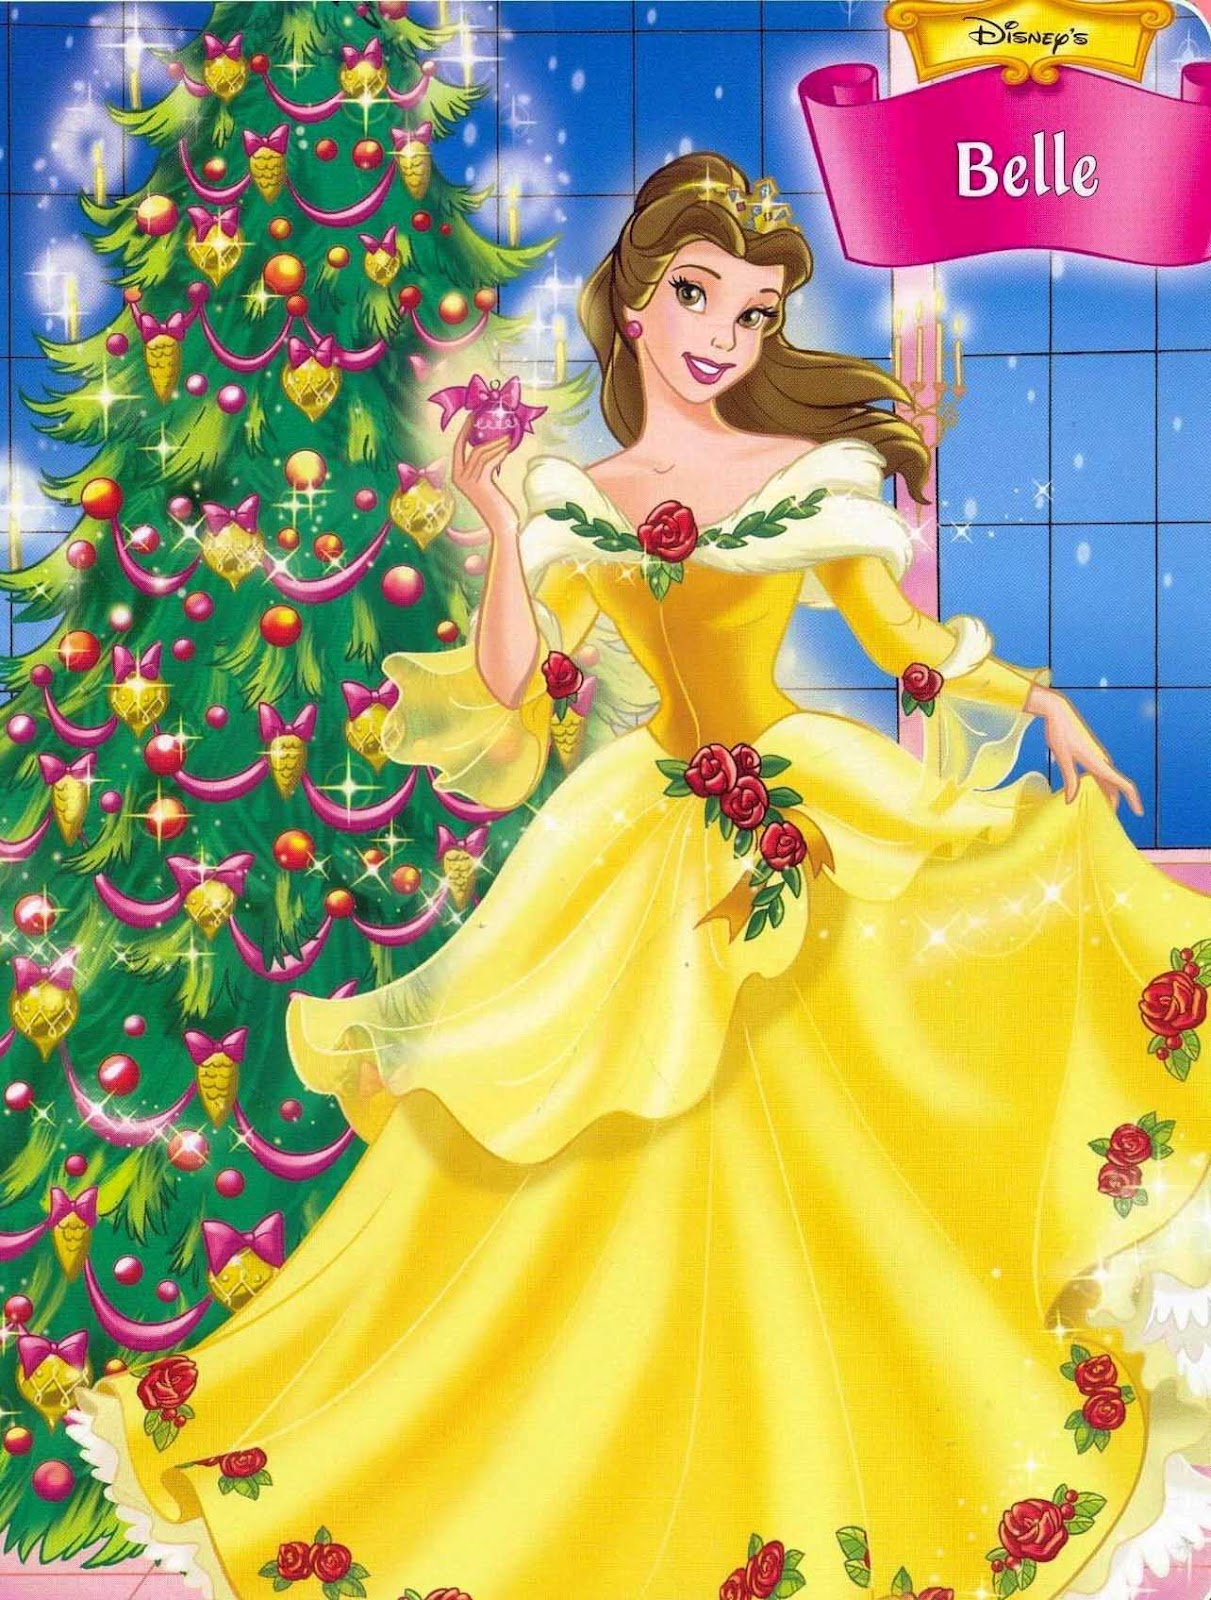 princess belle wallpaper,doll,yellow,barbie,gown,dress